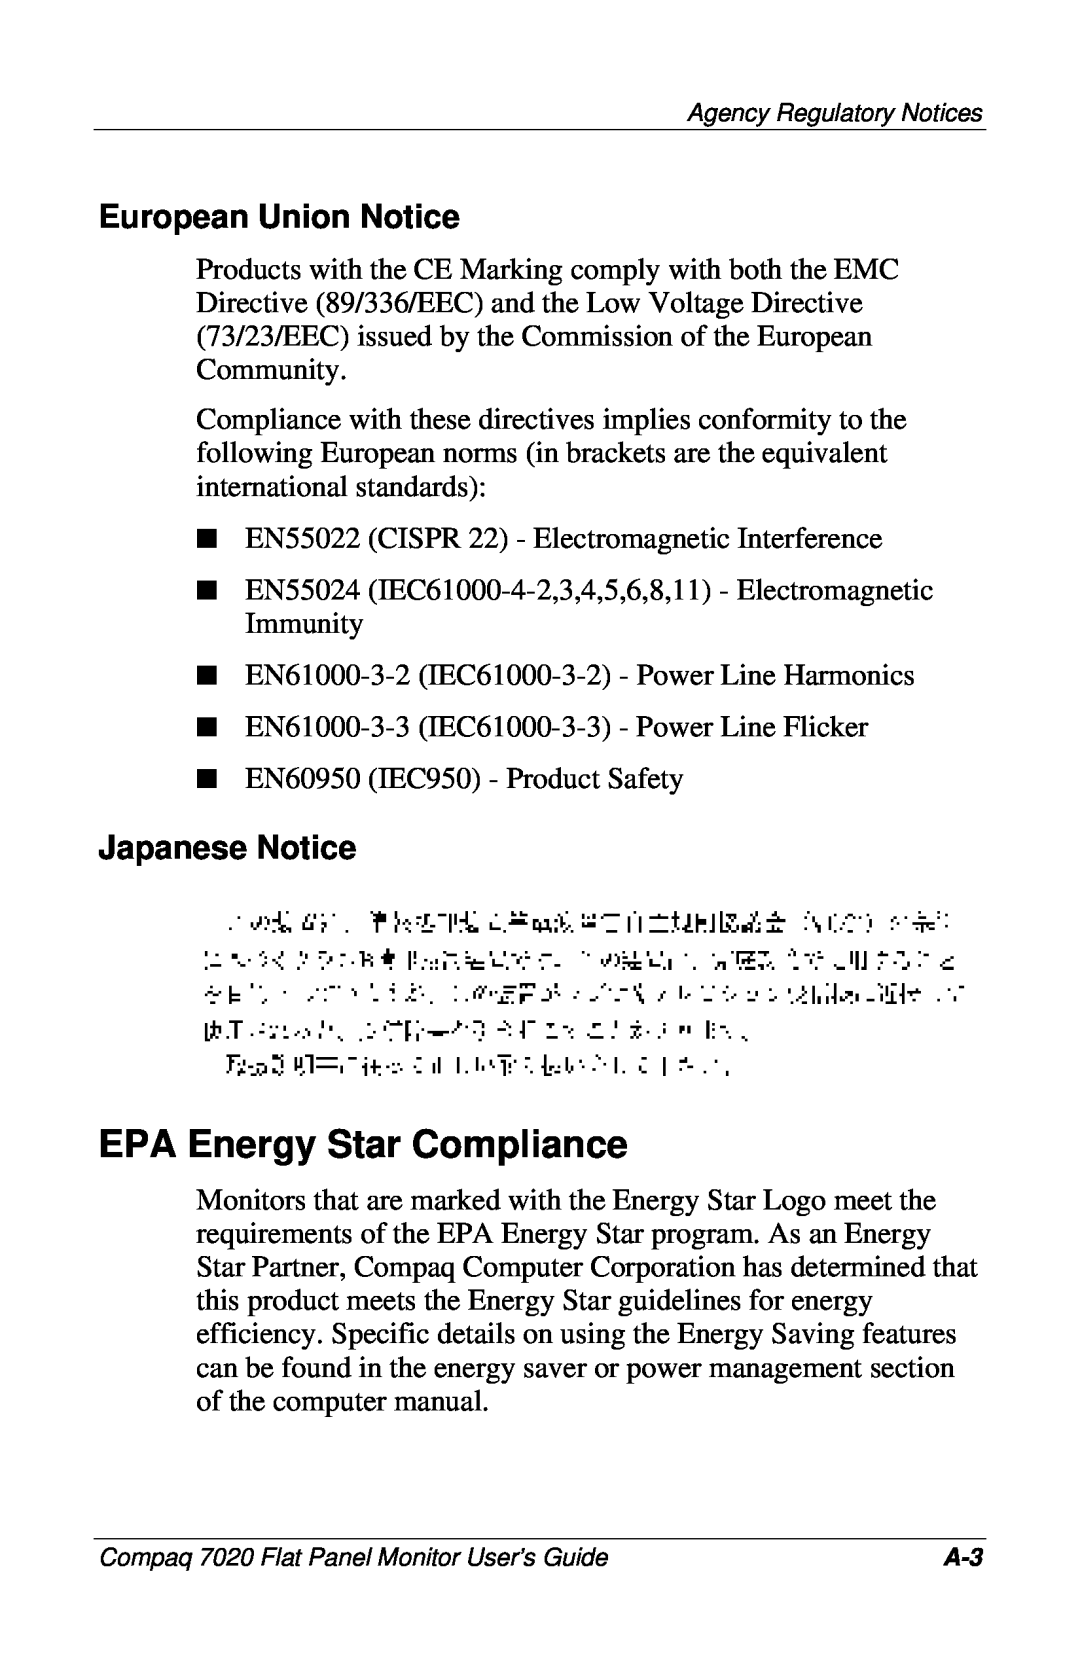 Compaq 7020 manual EPA Energy Star Compliance, European Union Notice, Japanese Notice 